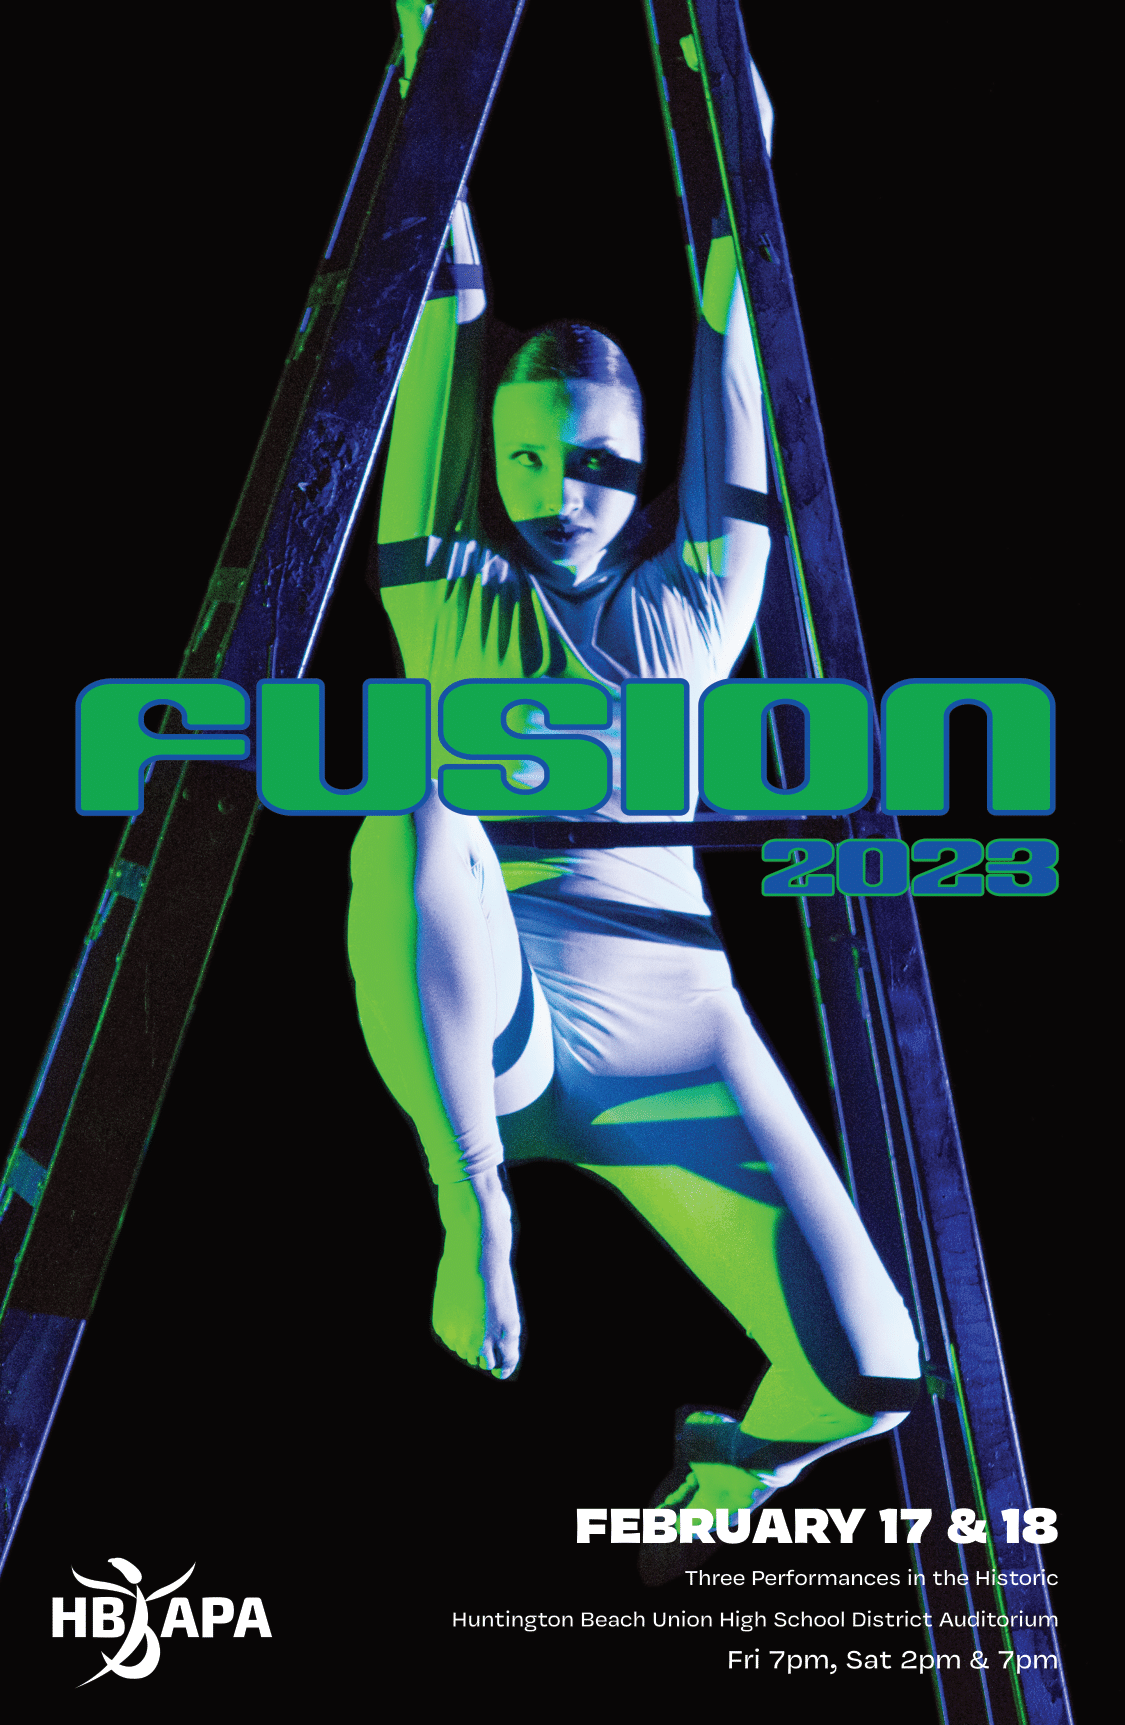 Fusion 2023